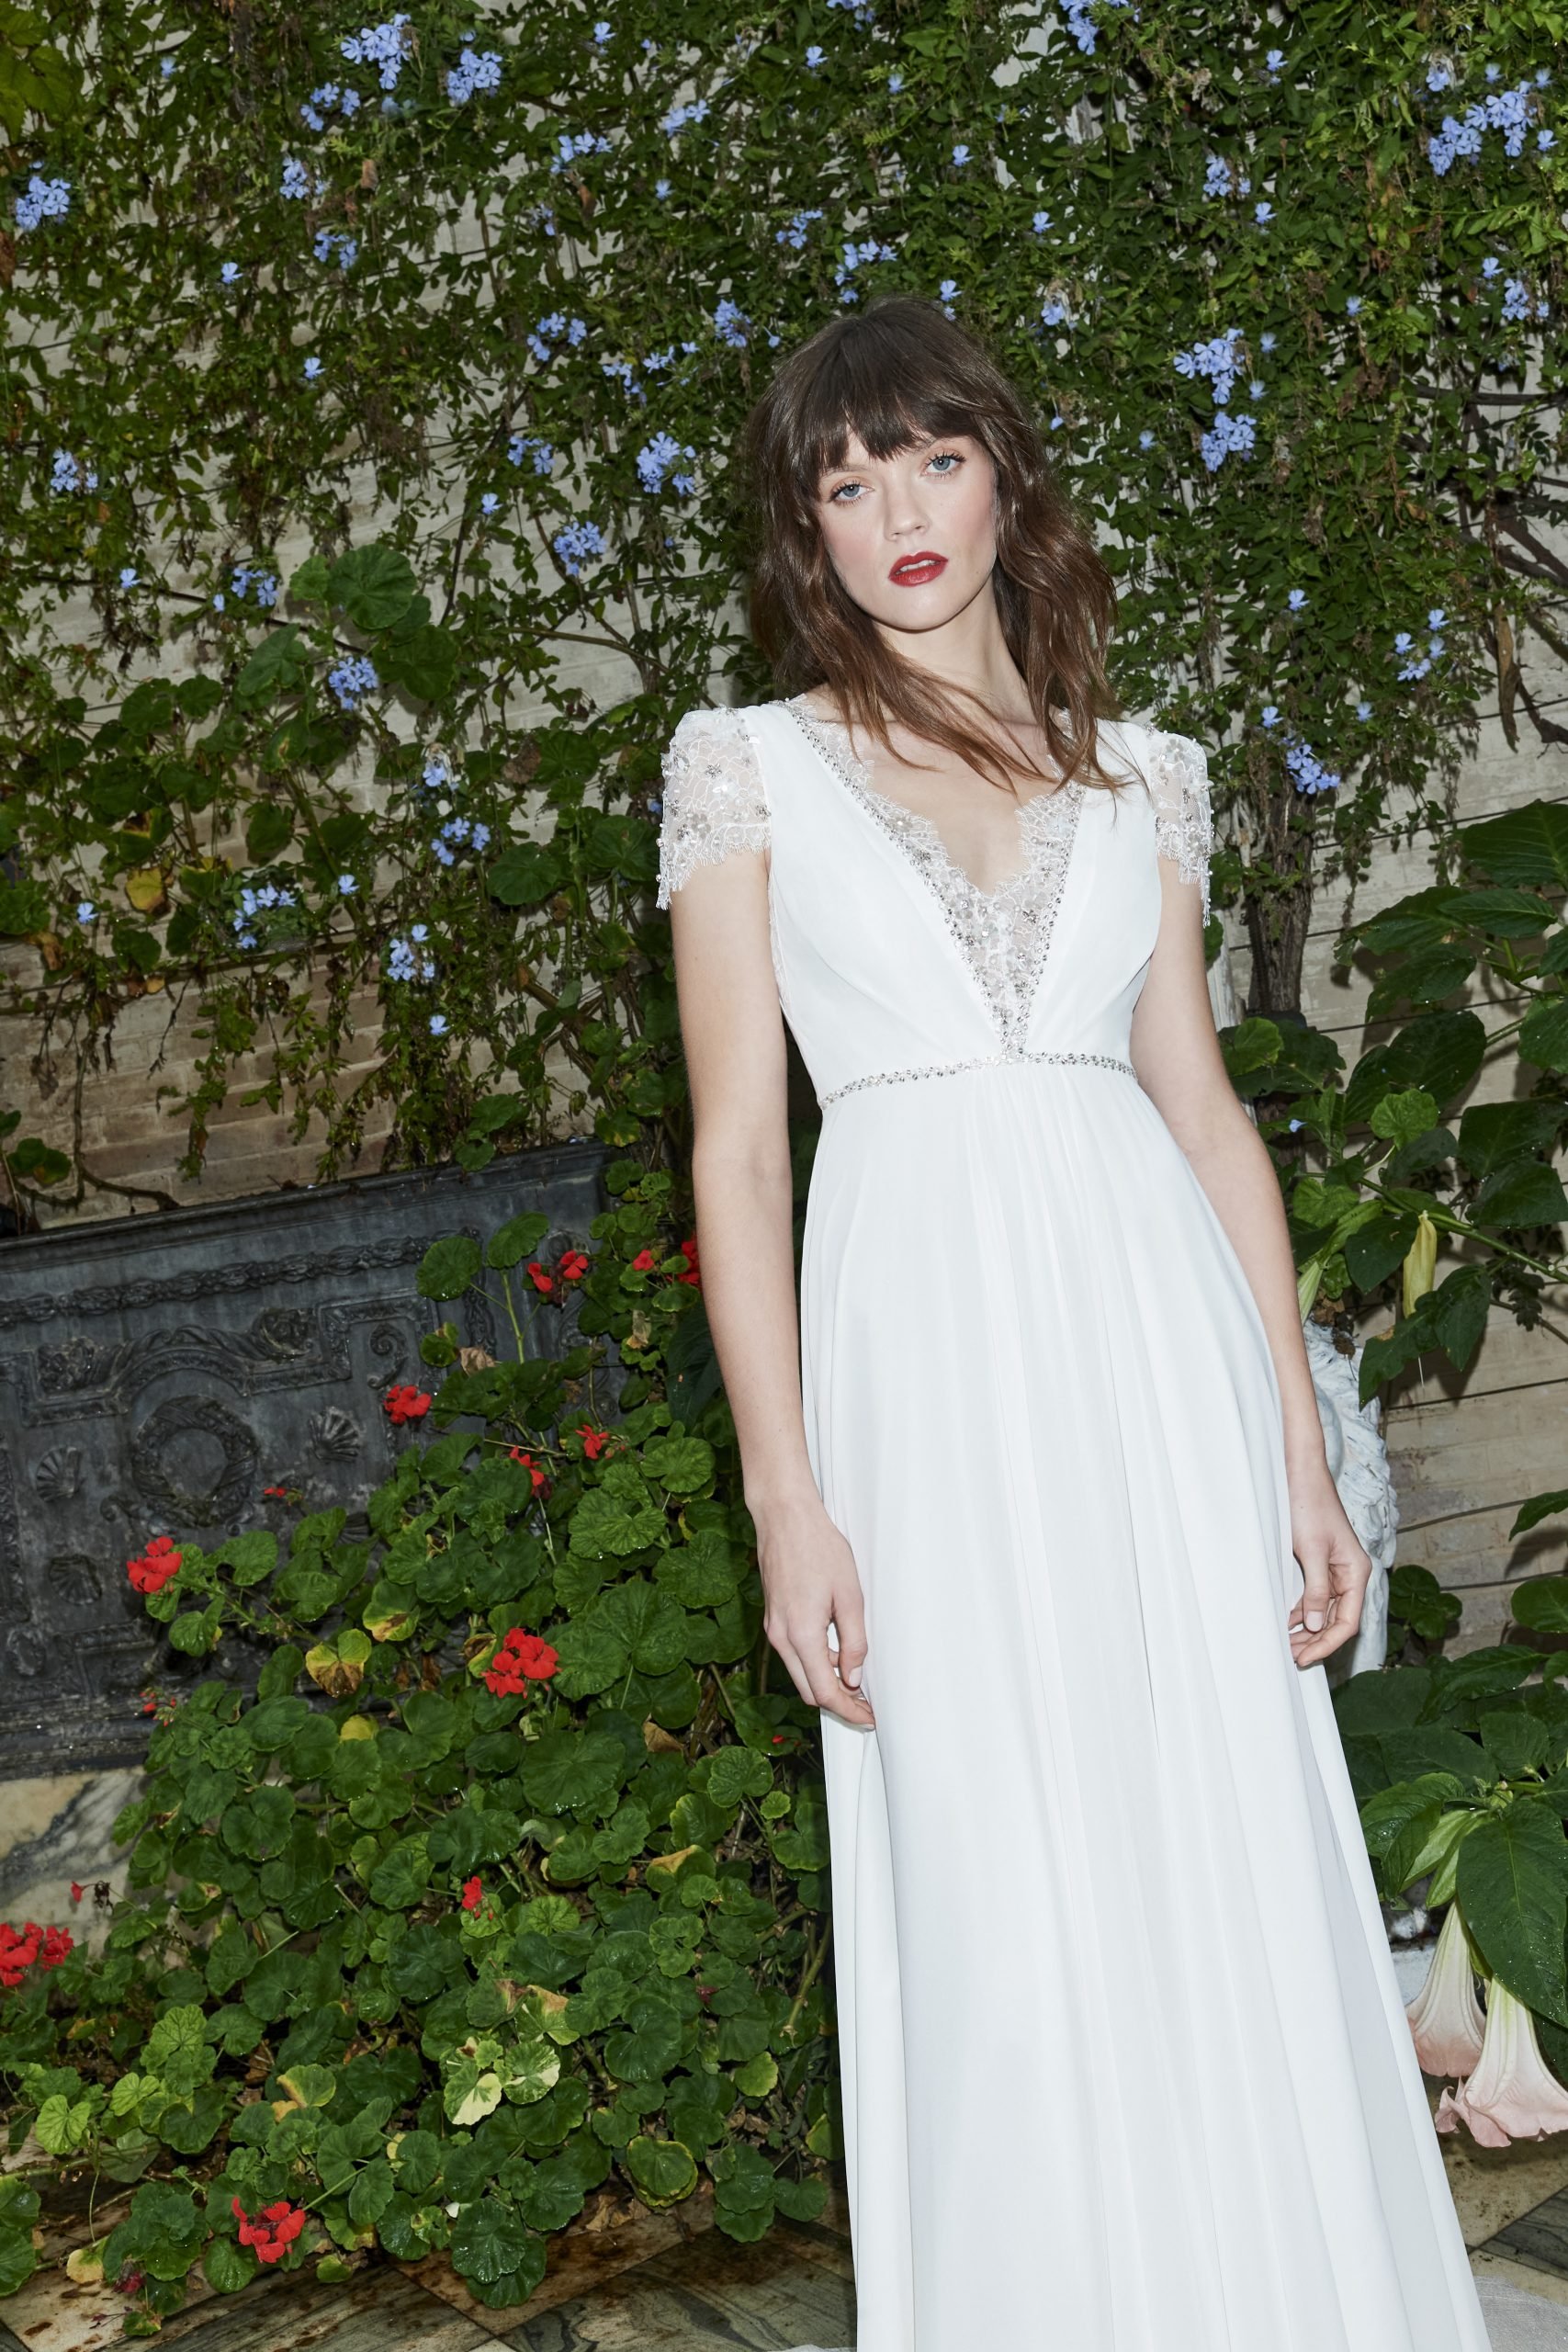 Jenny Packham — Ultimate Bride Ultimate Bride Chicago Bridal Salon